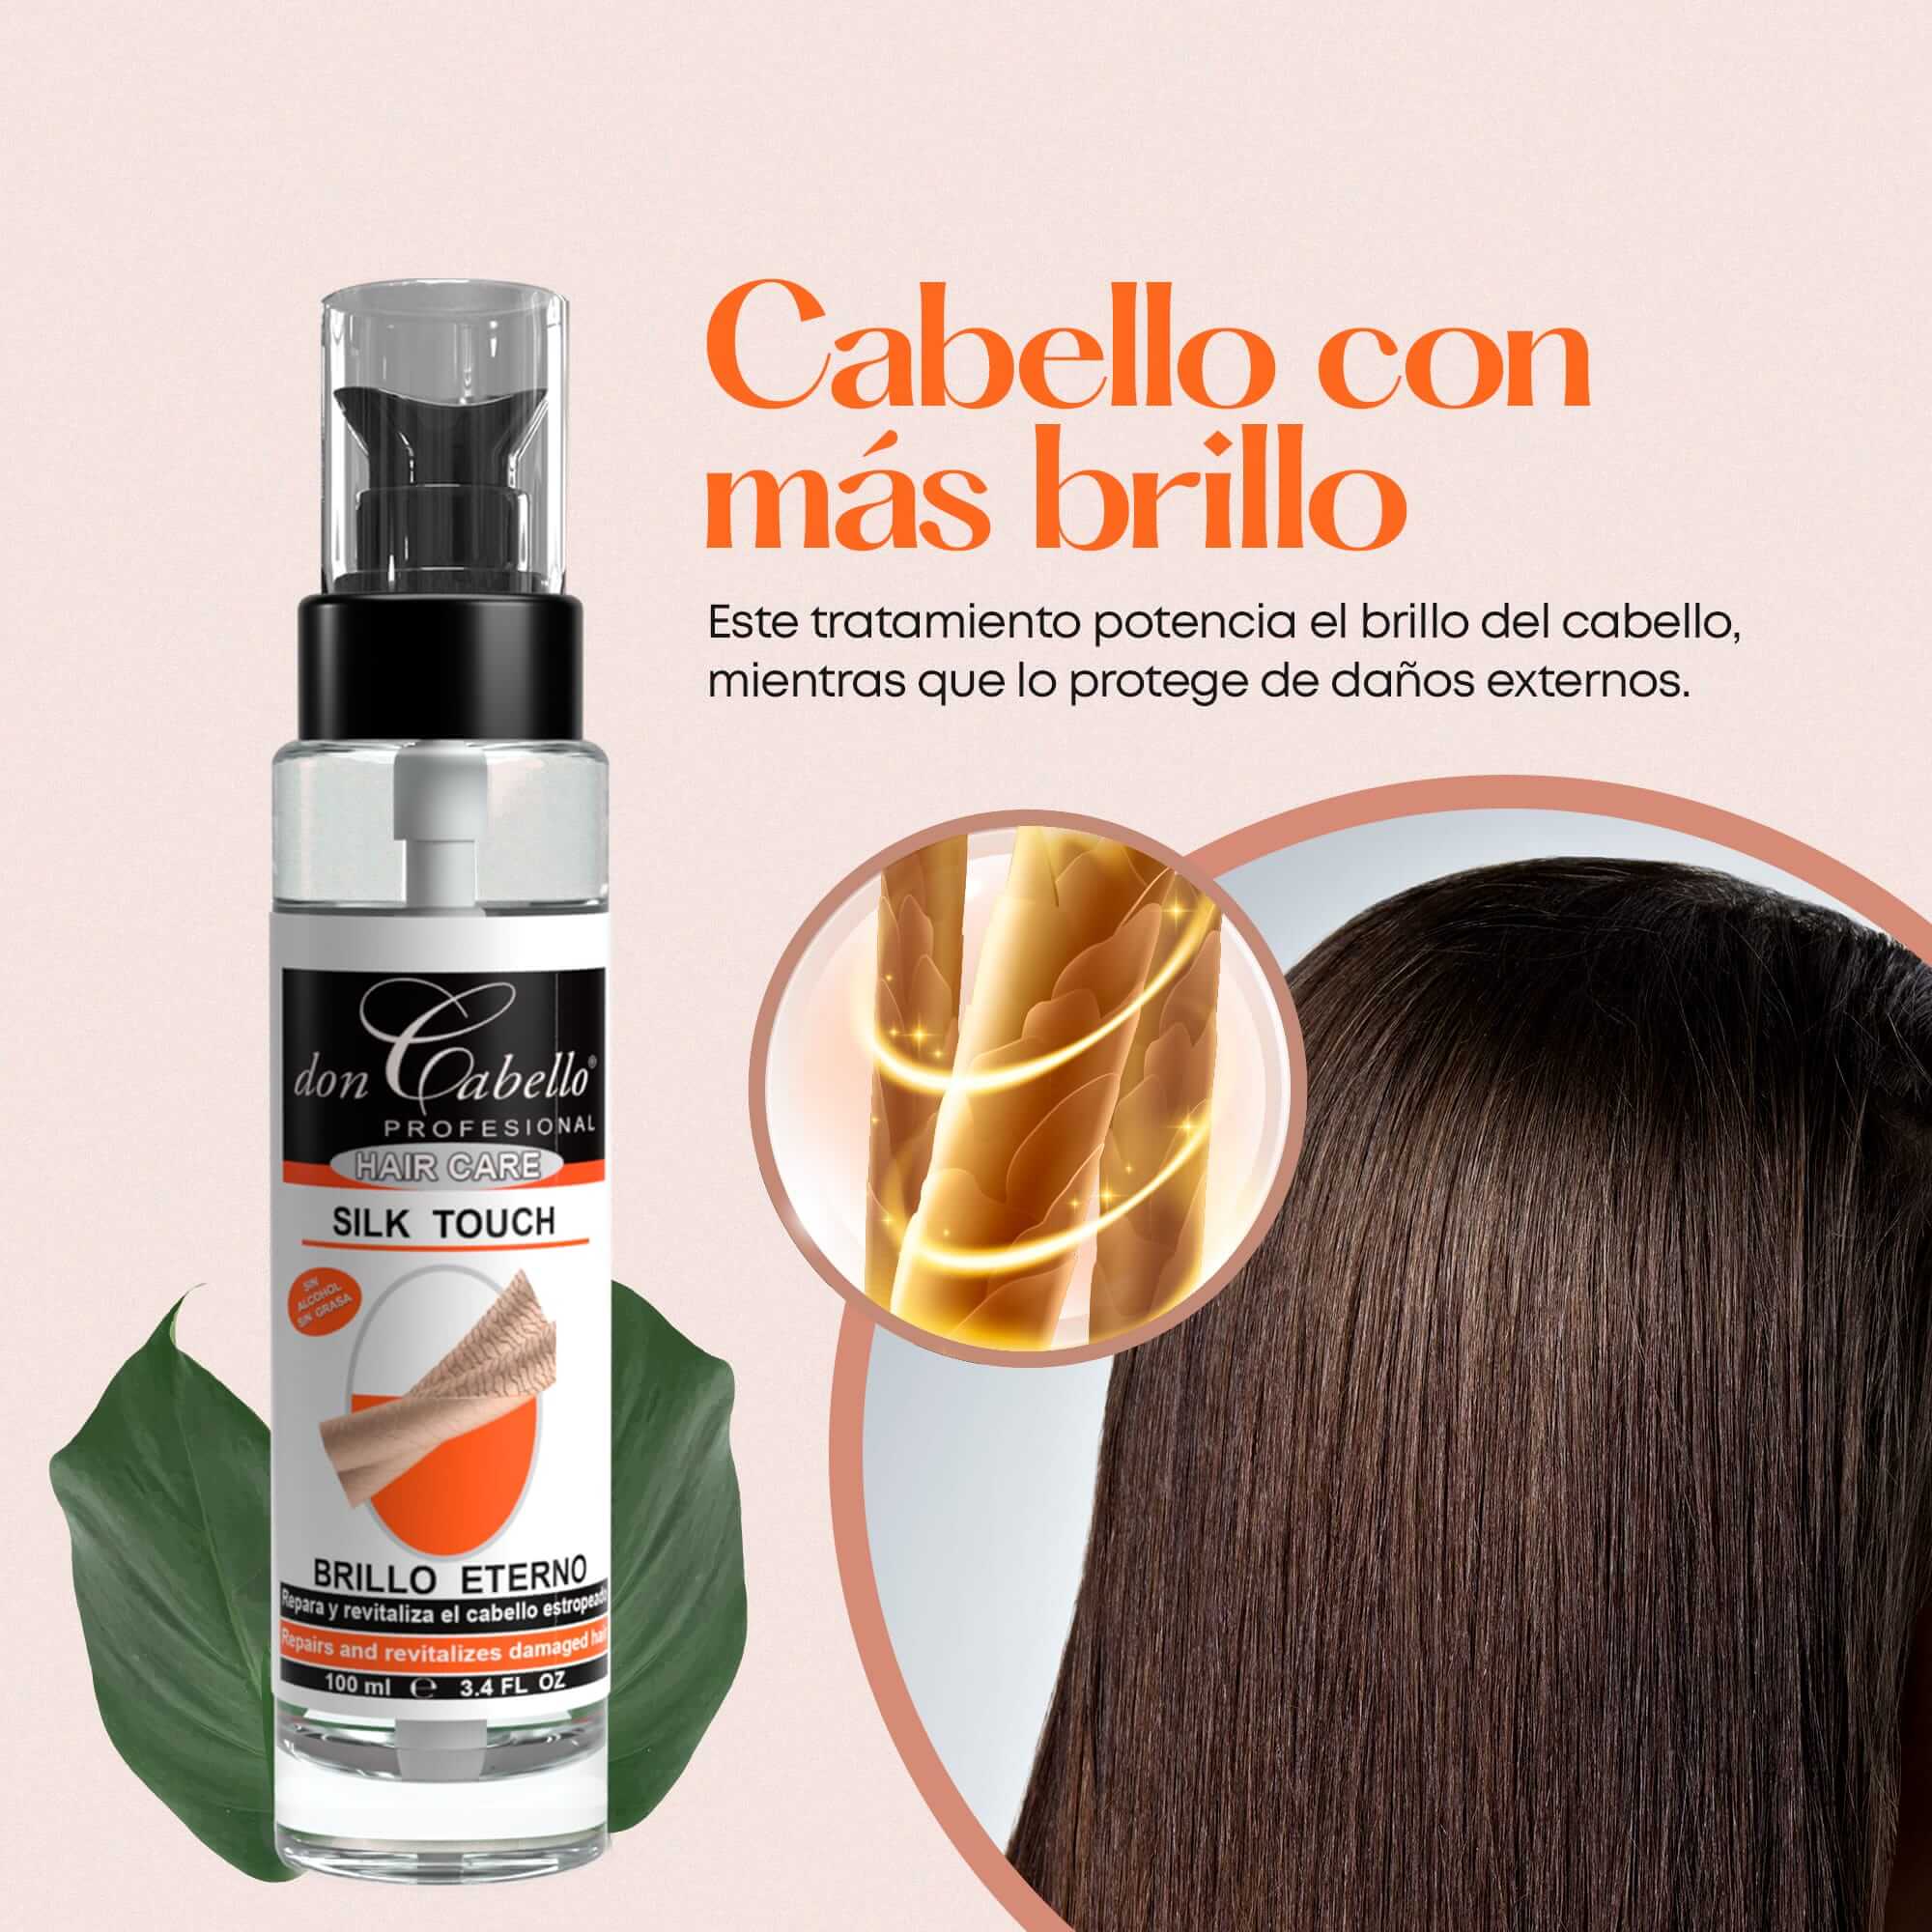 Don Cabello Silk Touch – Proteínas, vitaminas y minerales 100 ml - Doncabellopro